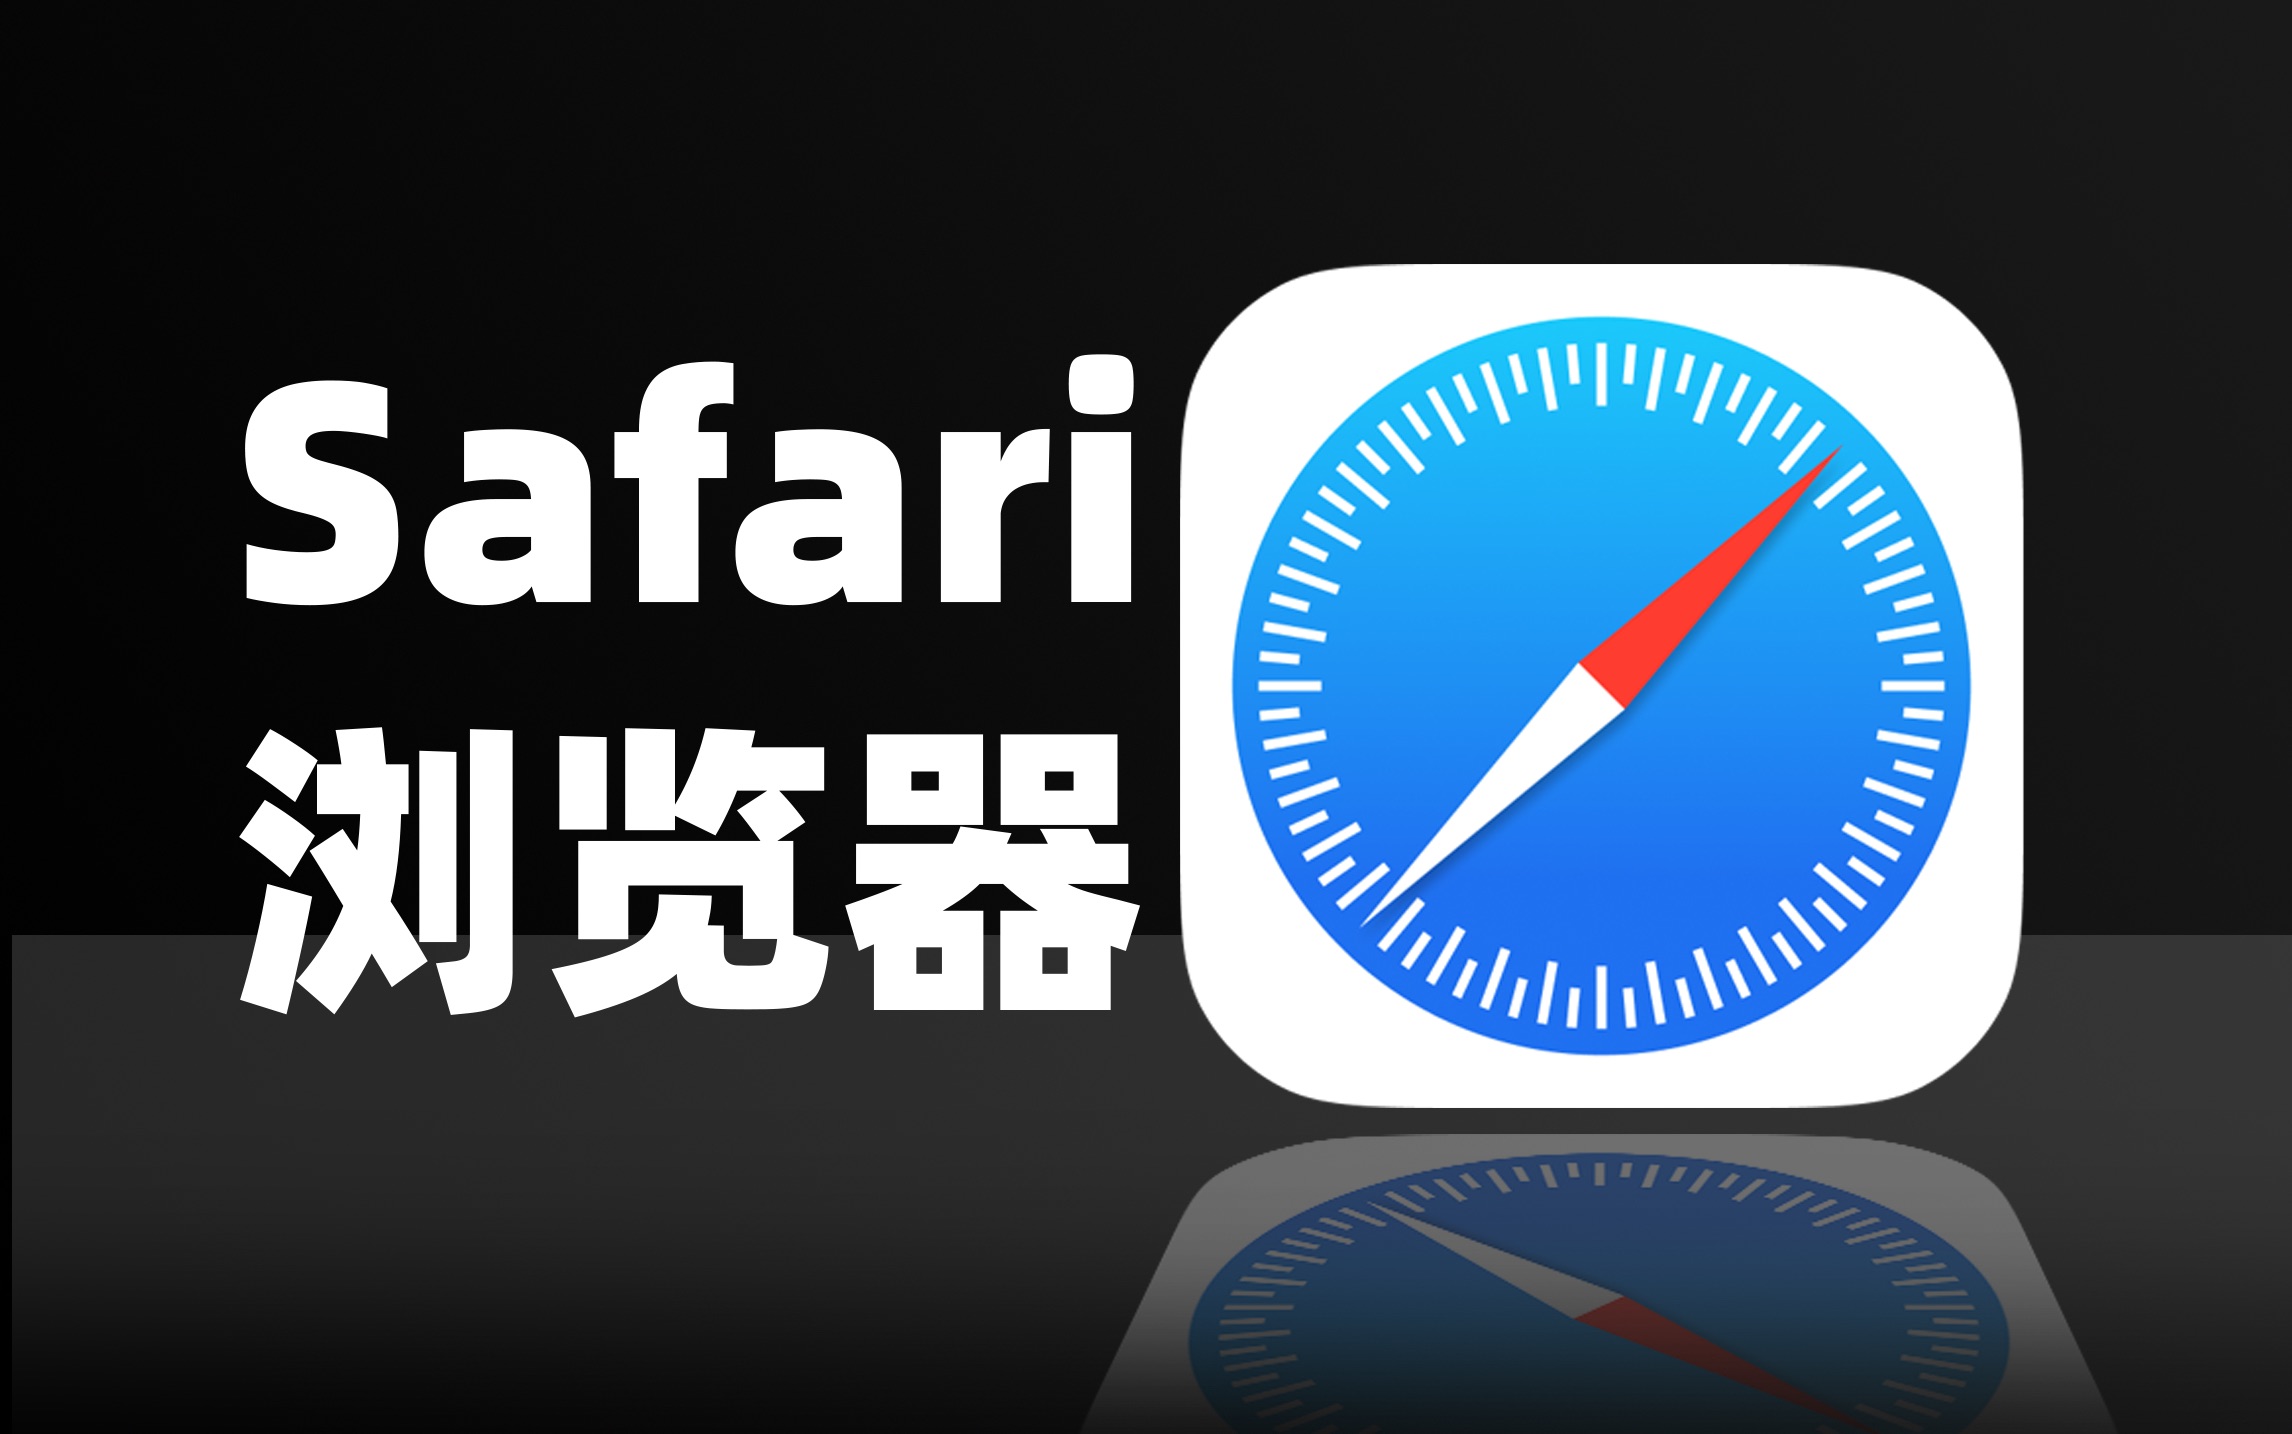 Safari才是iPhone上最好用的浏览器??